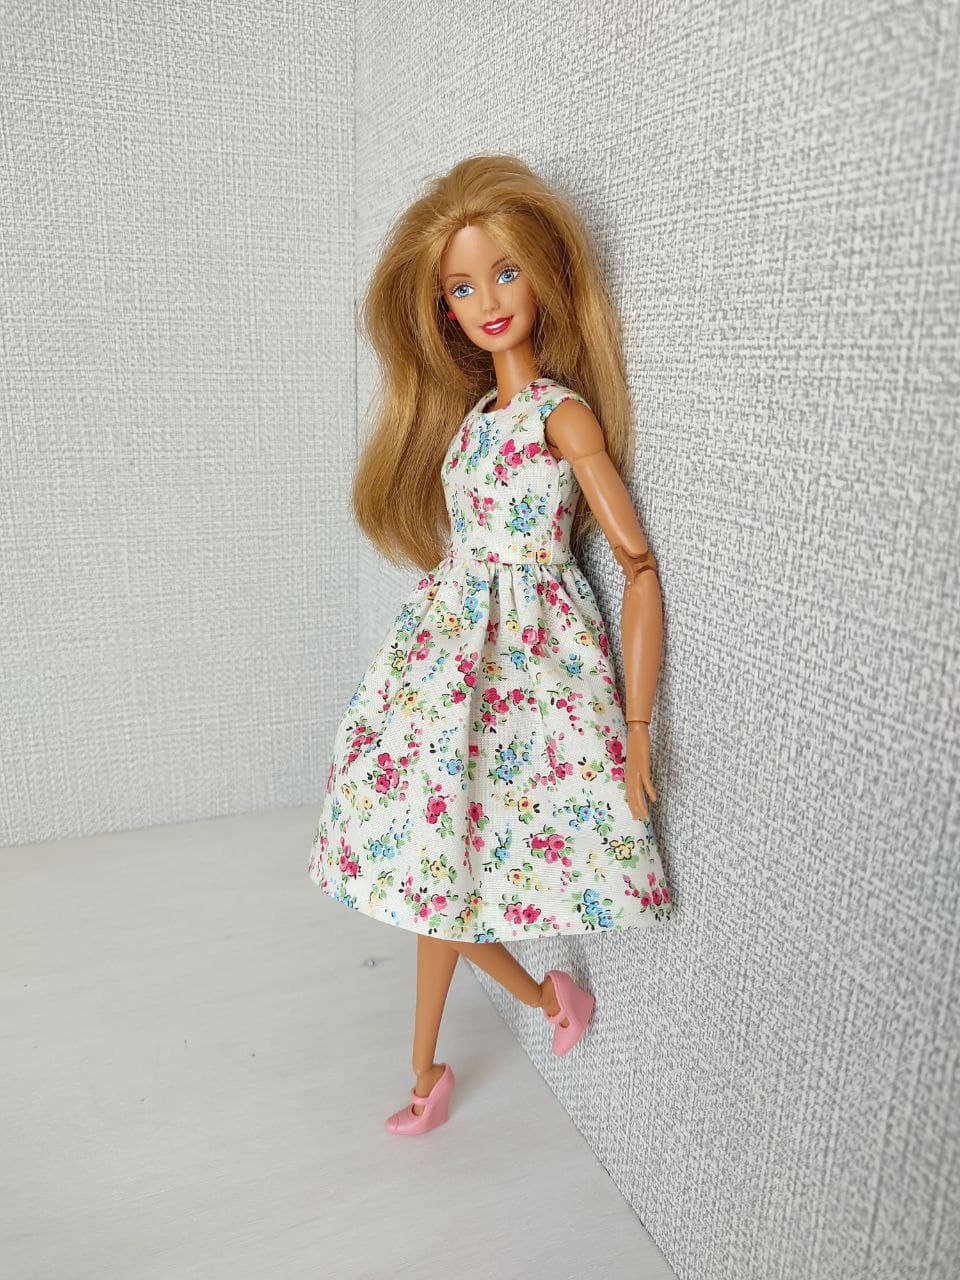 Barbie dolls dress pattern